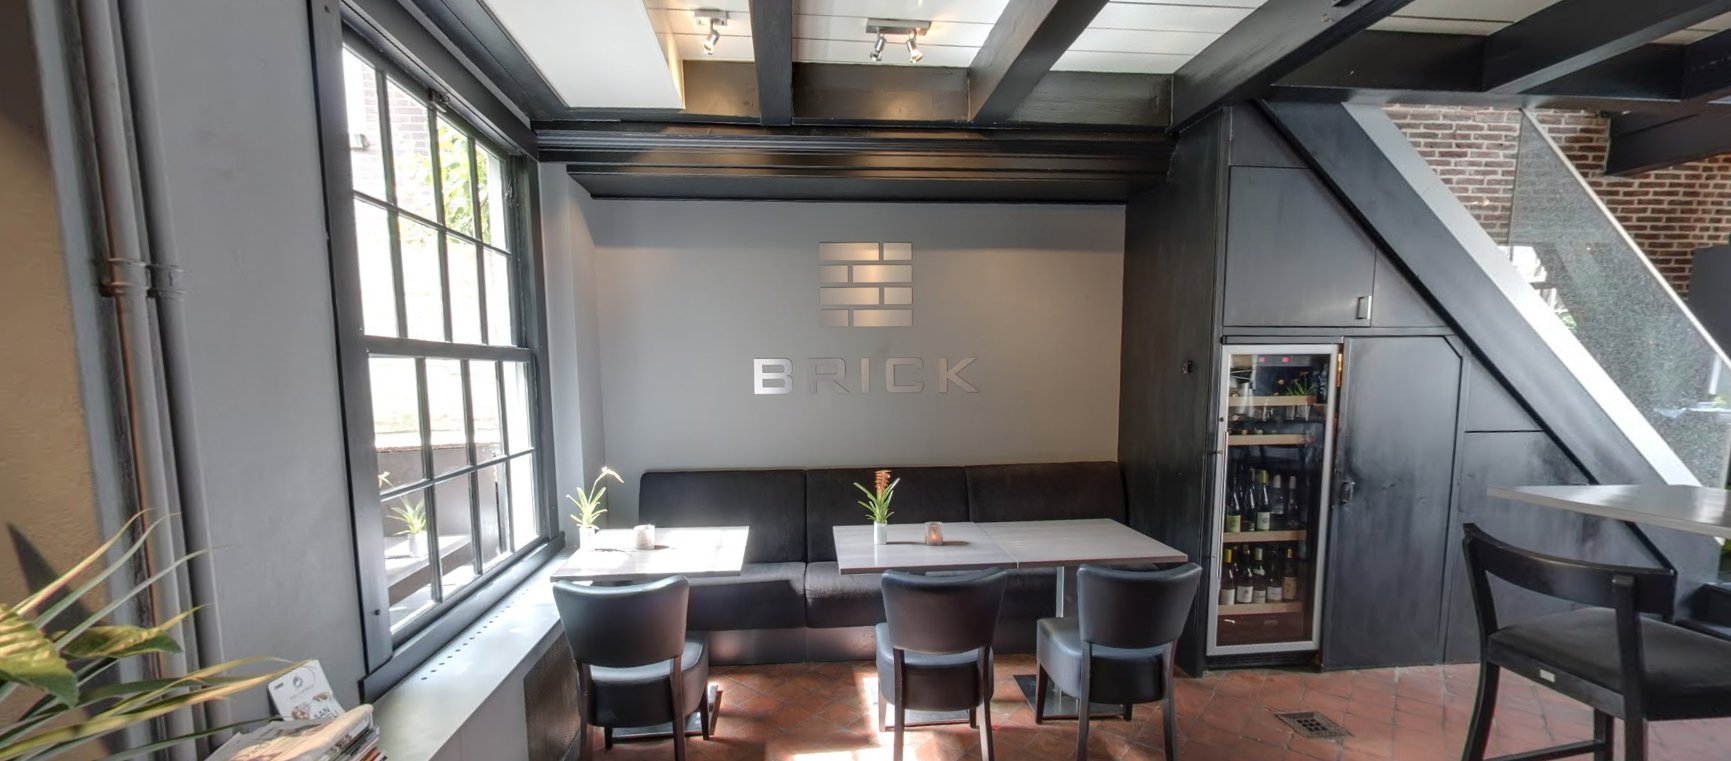 Restaurant Brick